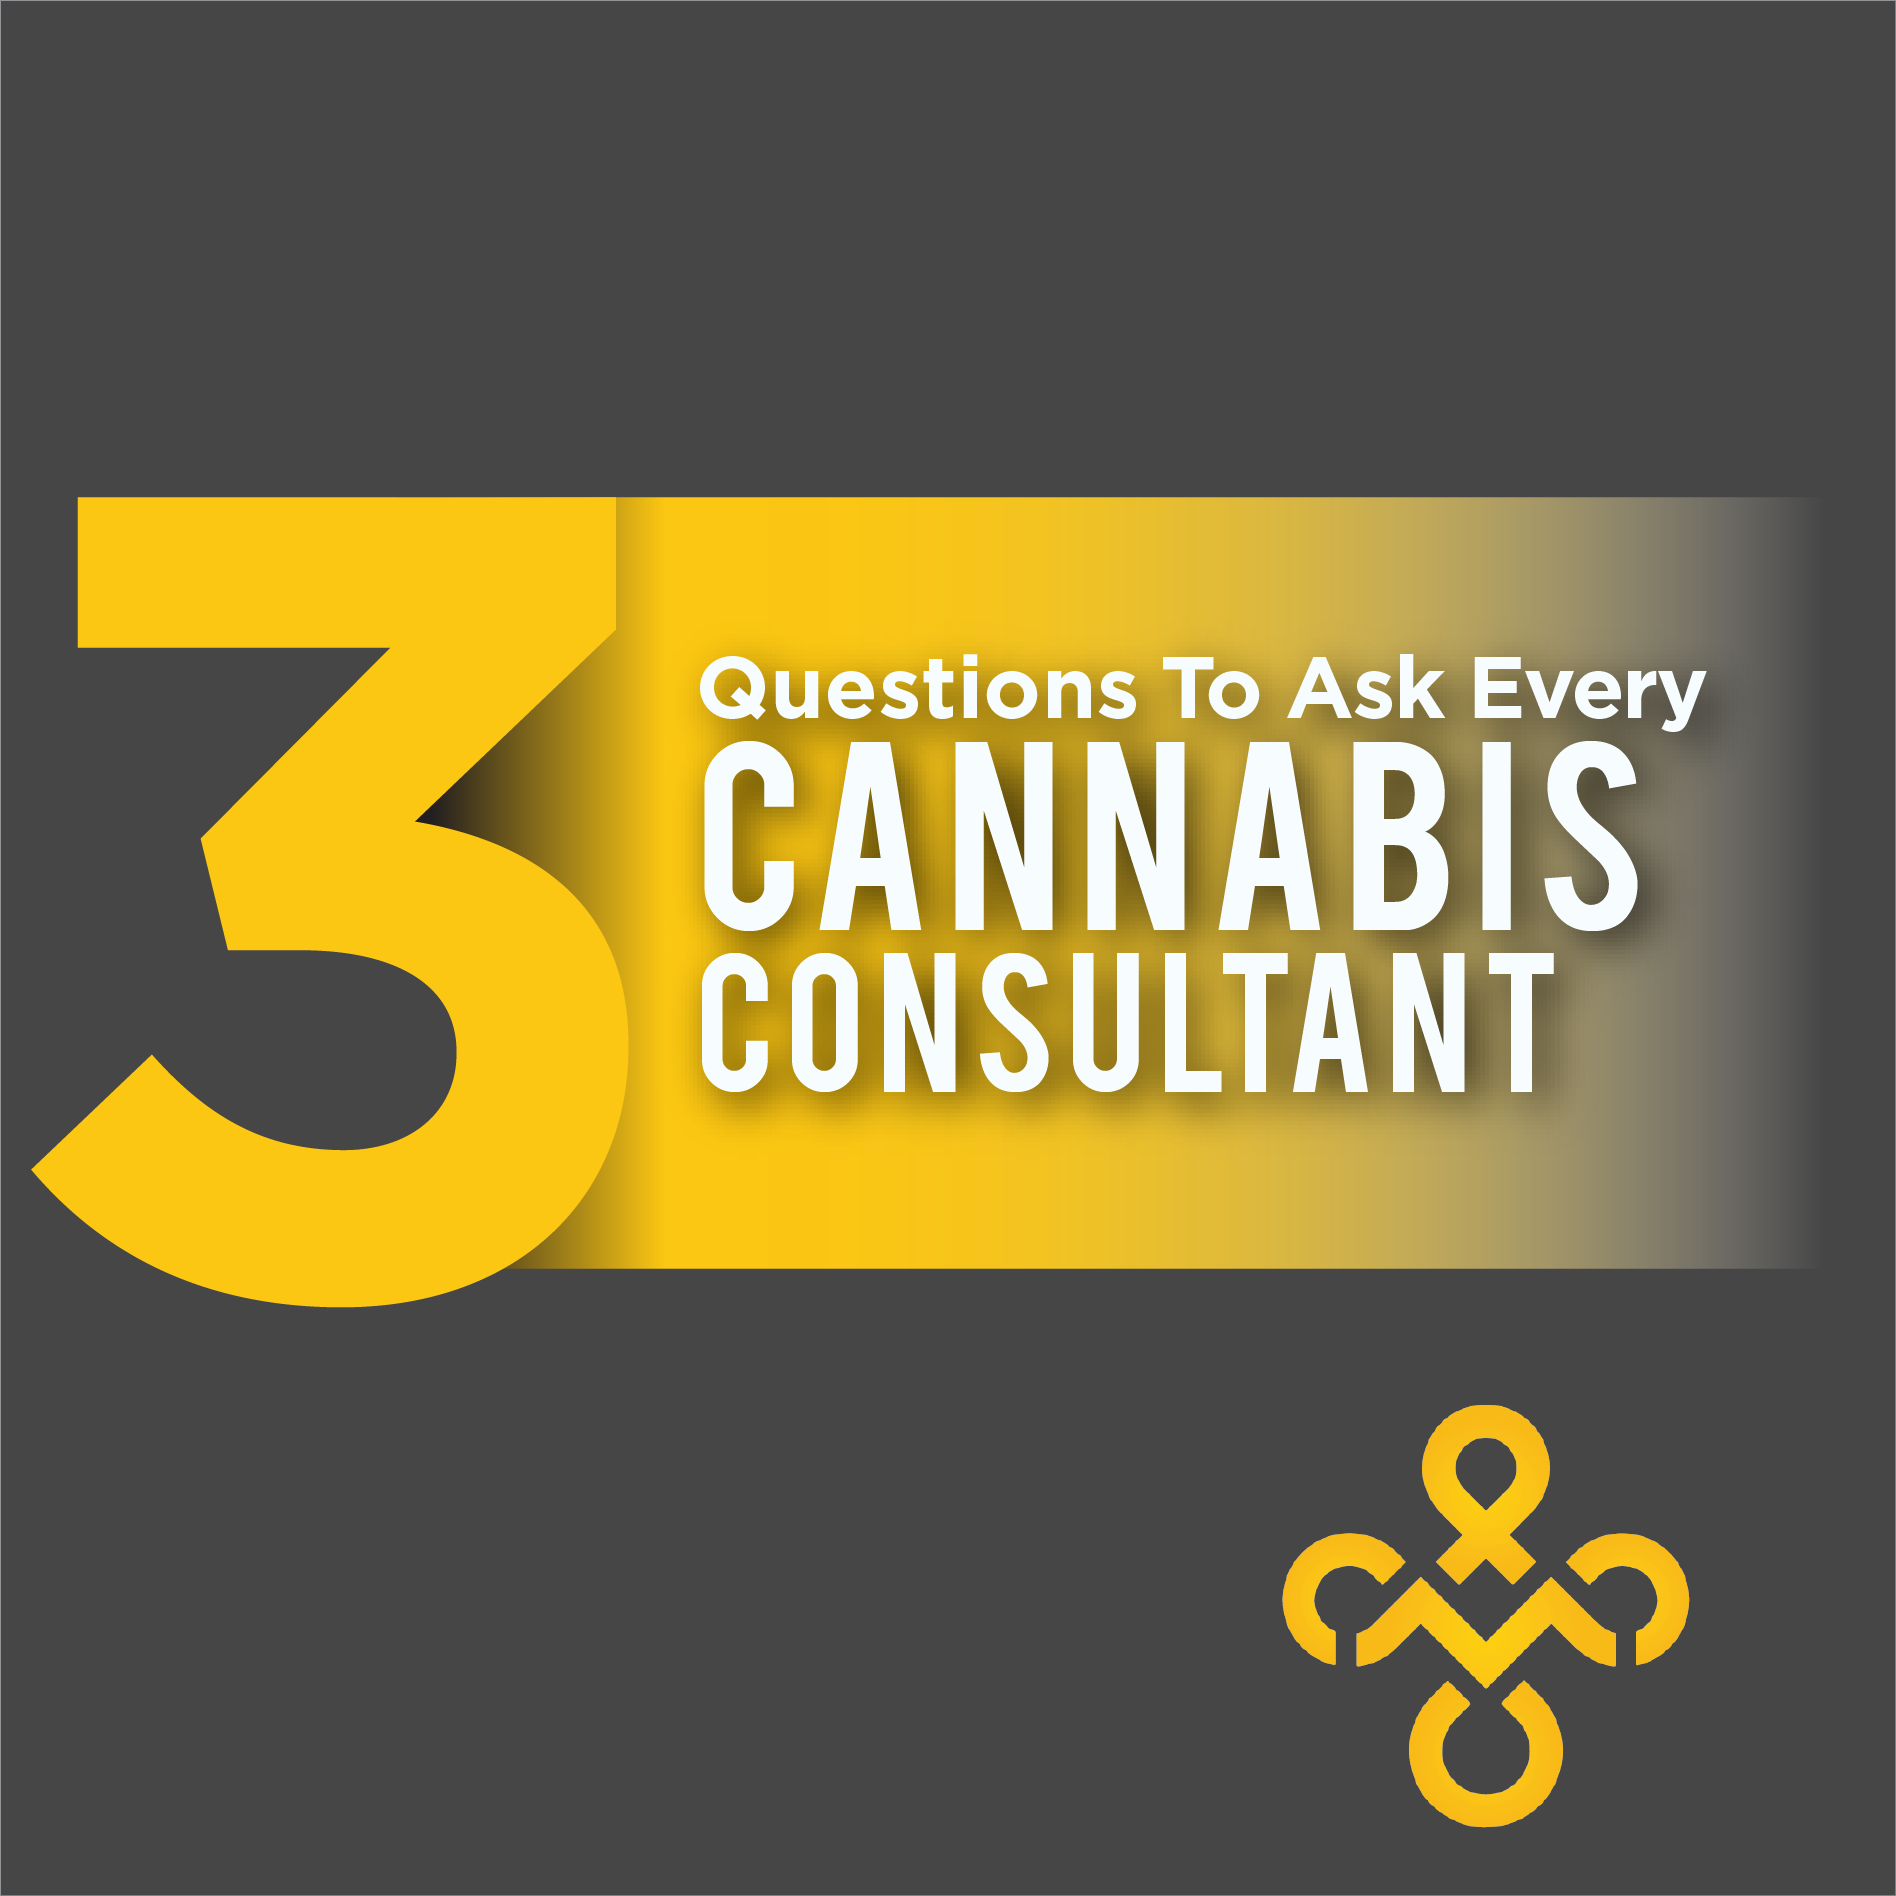 Medible review california orders weedmaps to stop advertising unlicensed marijuana businesses